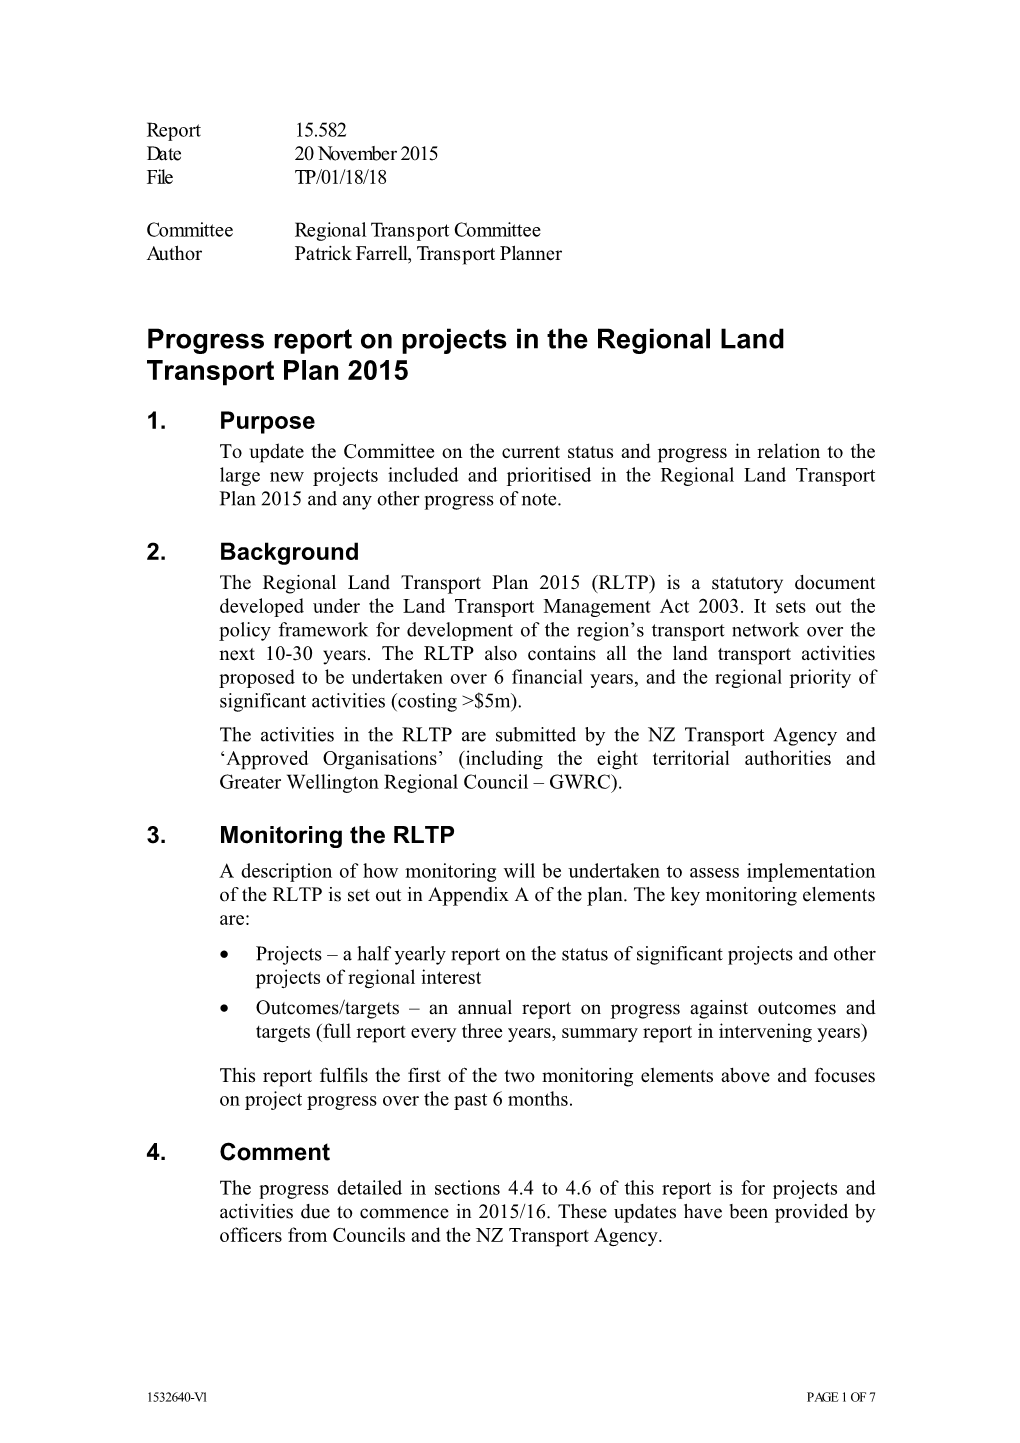 Progress Report on Projects in the Regional Land Transport Plan 2015